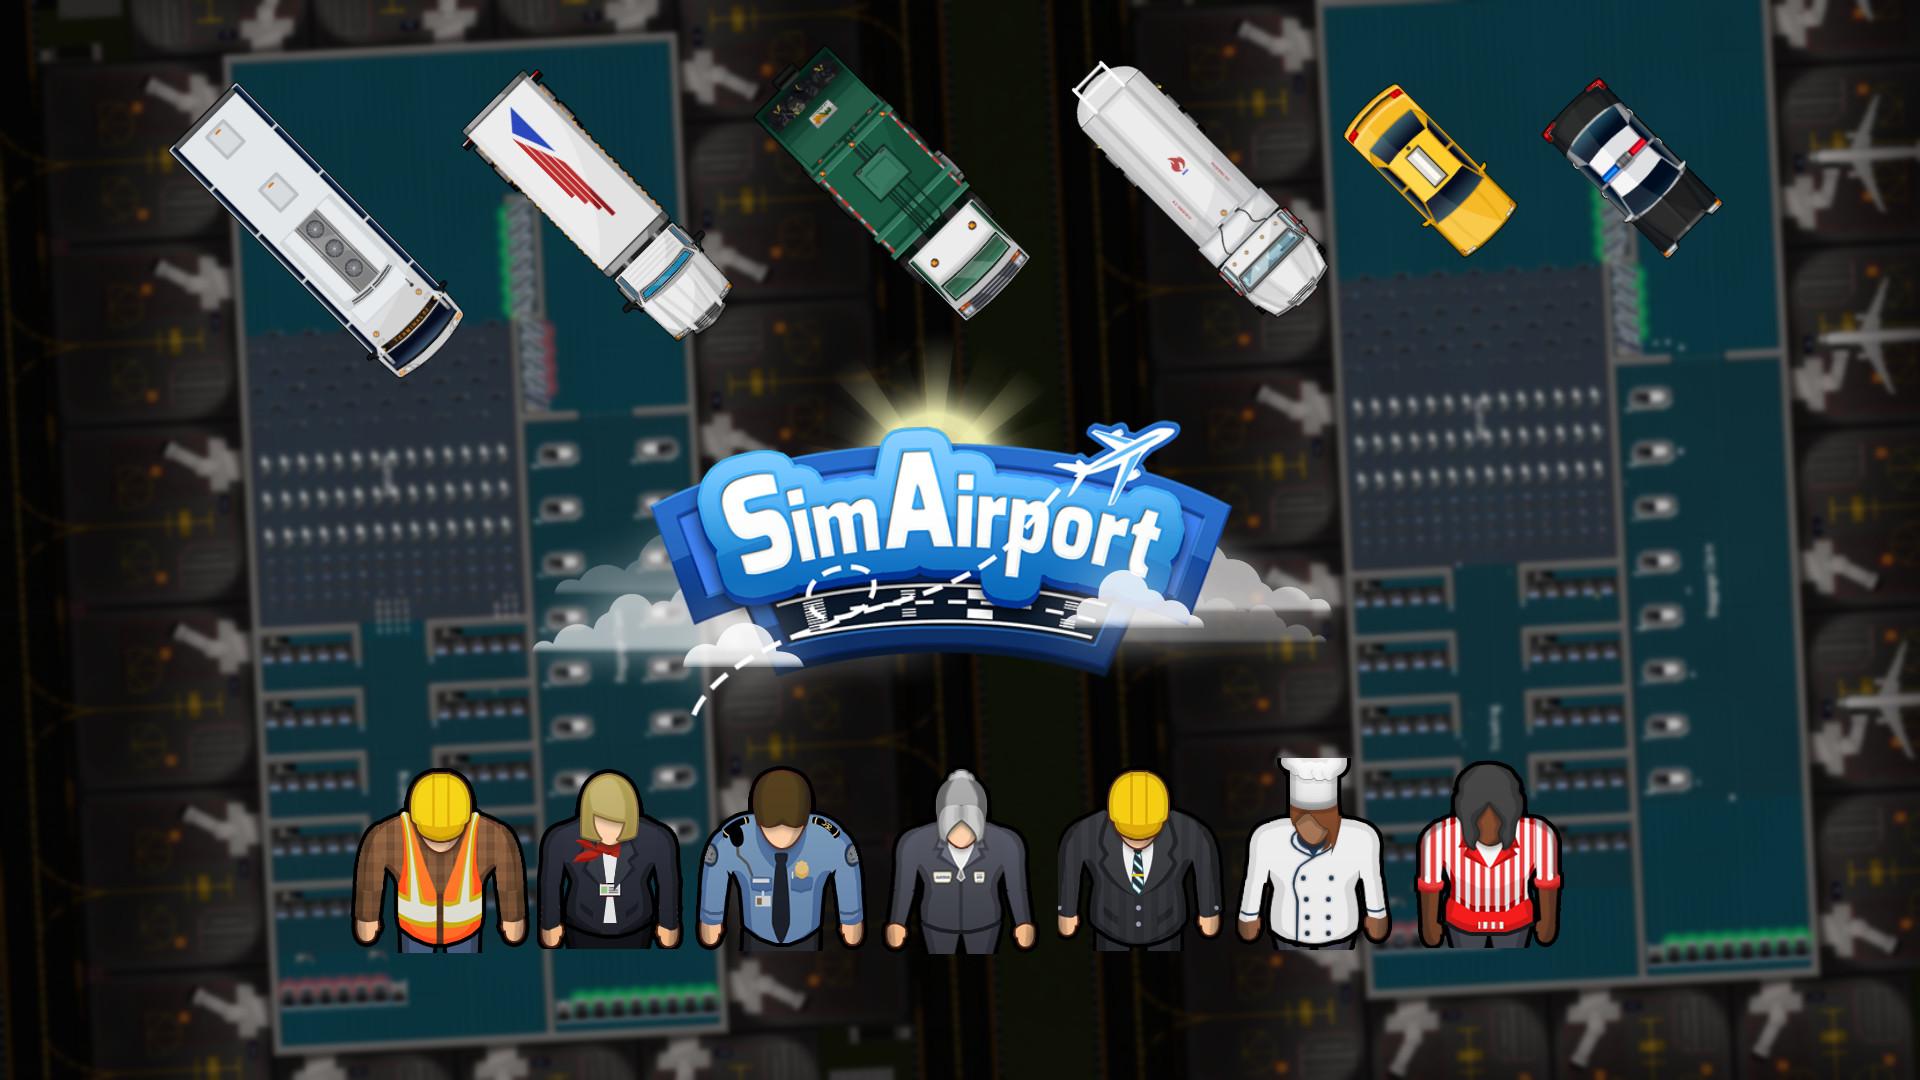 Screenshot №2 from game SimAirport